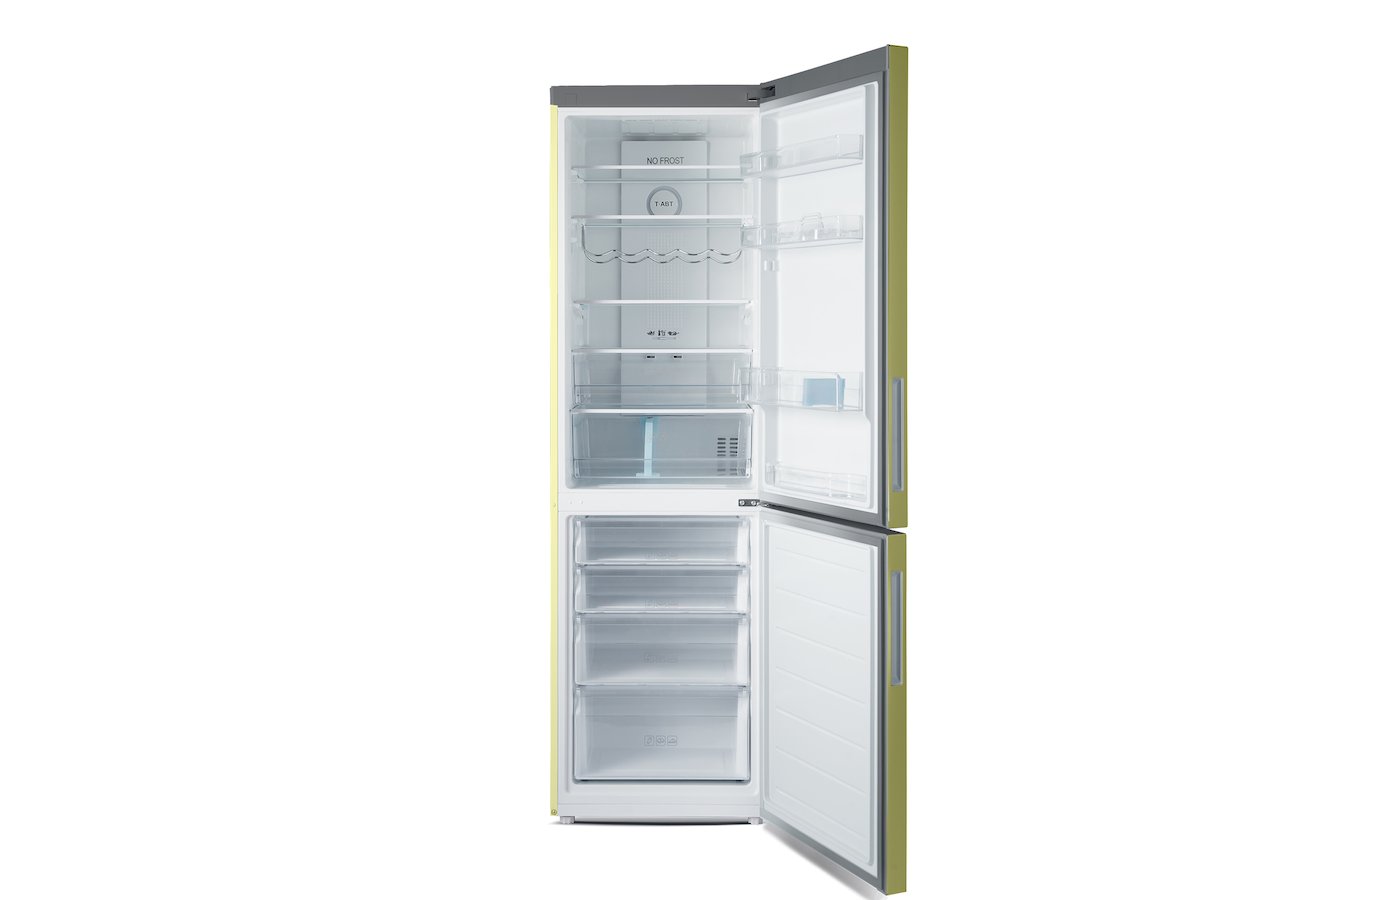 Haier c2f636c. Холодильник Haier c2f636ccrg. Холодильник Хайер 636. Холодильник Haier c2f636ccrg бежевый. Хаер c2f636cwrg.